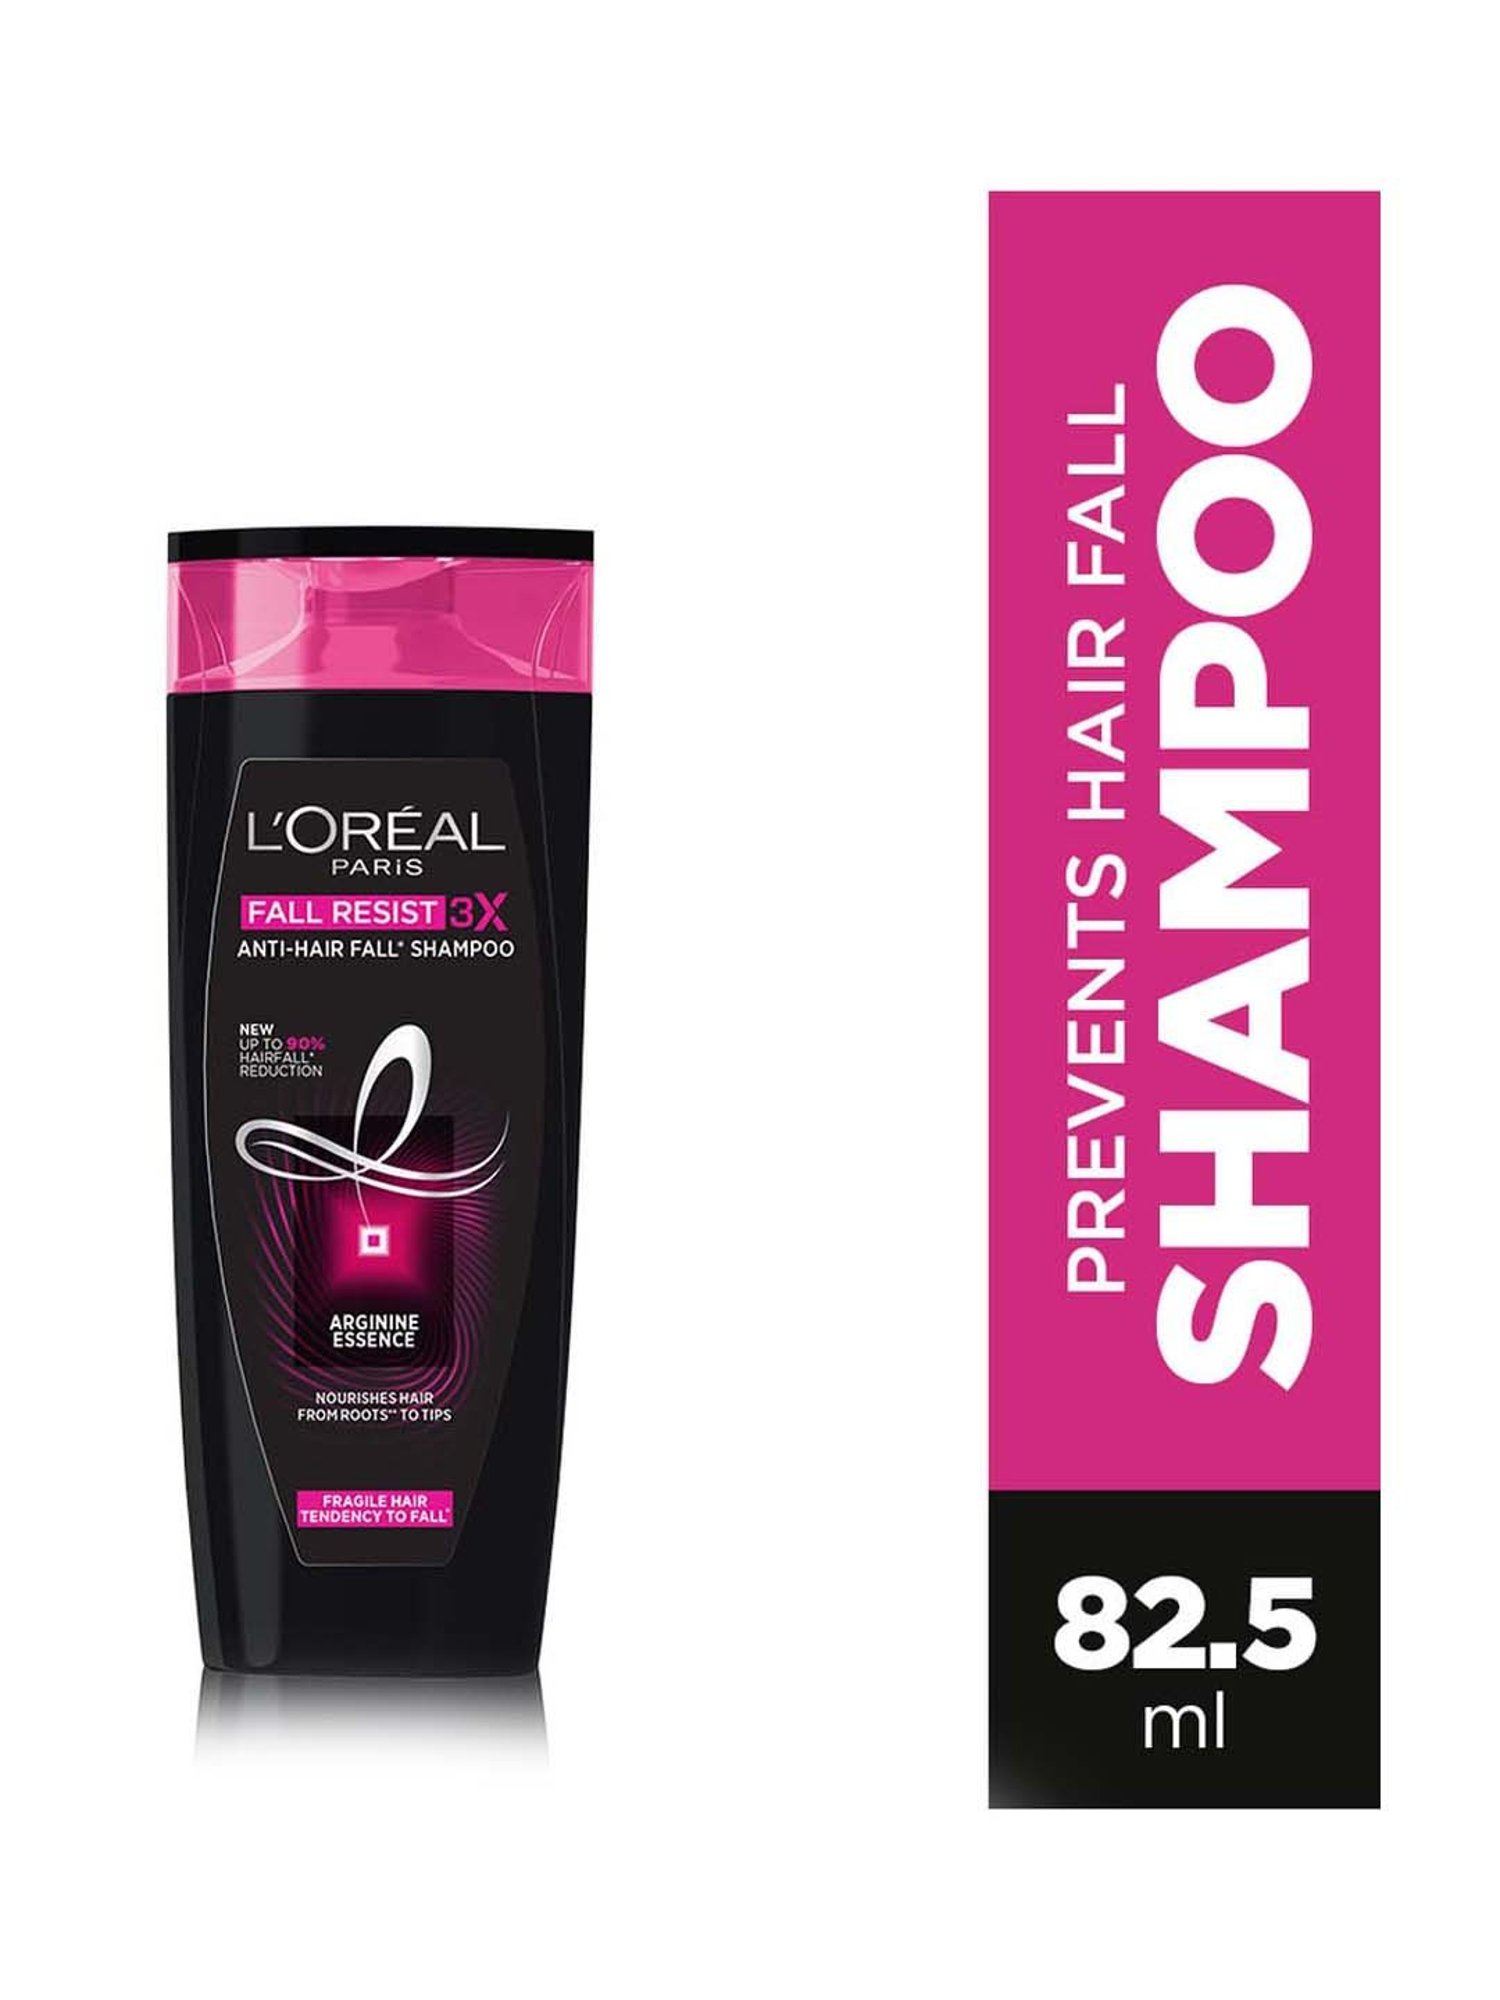 L'Oreal Paris Anti-Hair Fall Shampoo 180 ml & Conditioner 180 ml, for Hair  Growth, For Thinning & Hair Loss,Fall Resist 3X ,(Pack of 2)